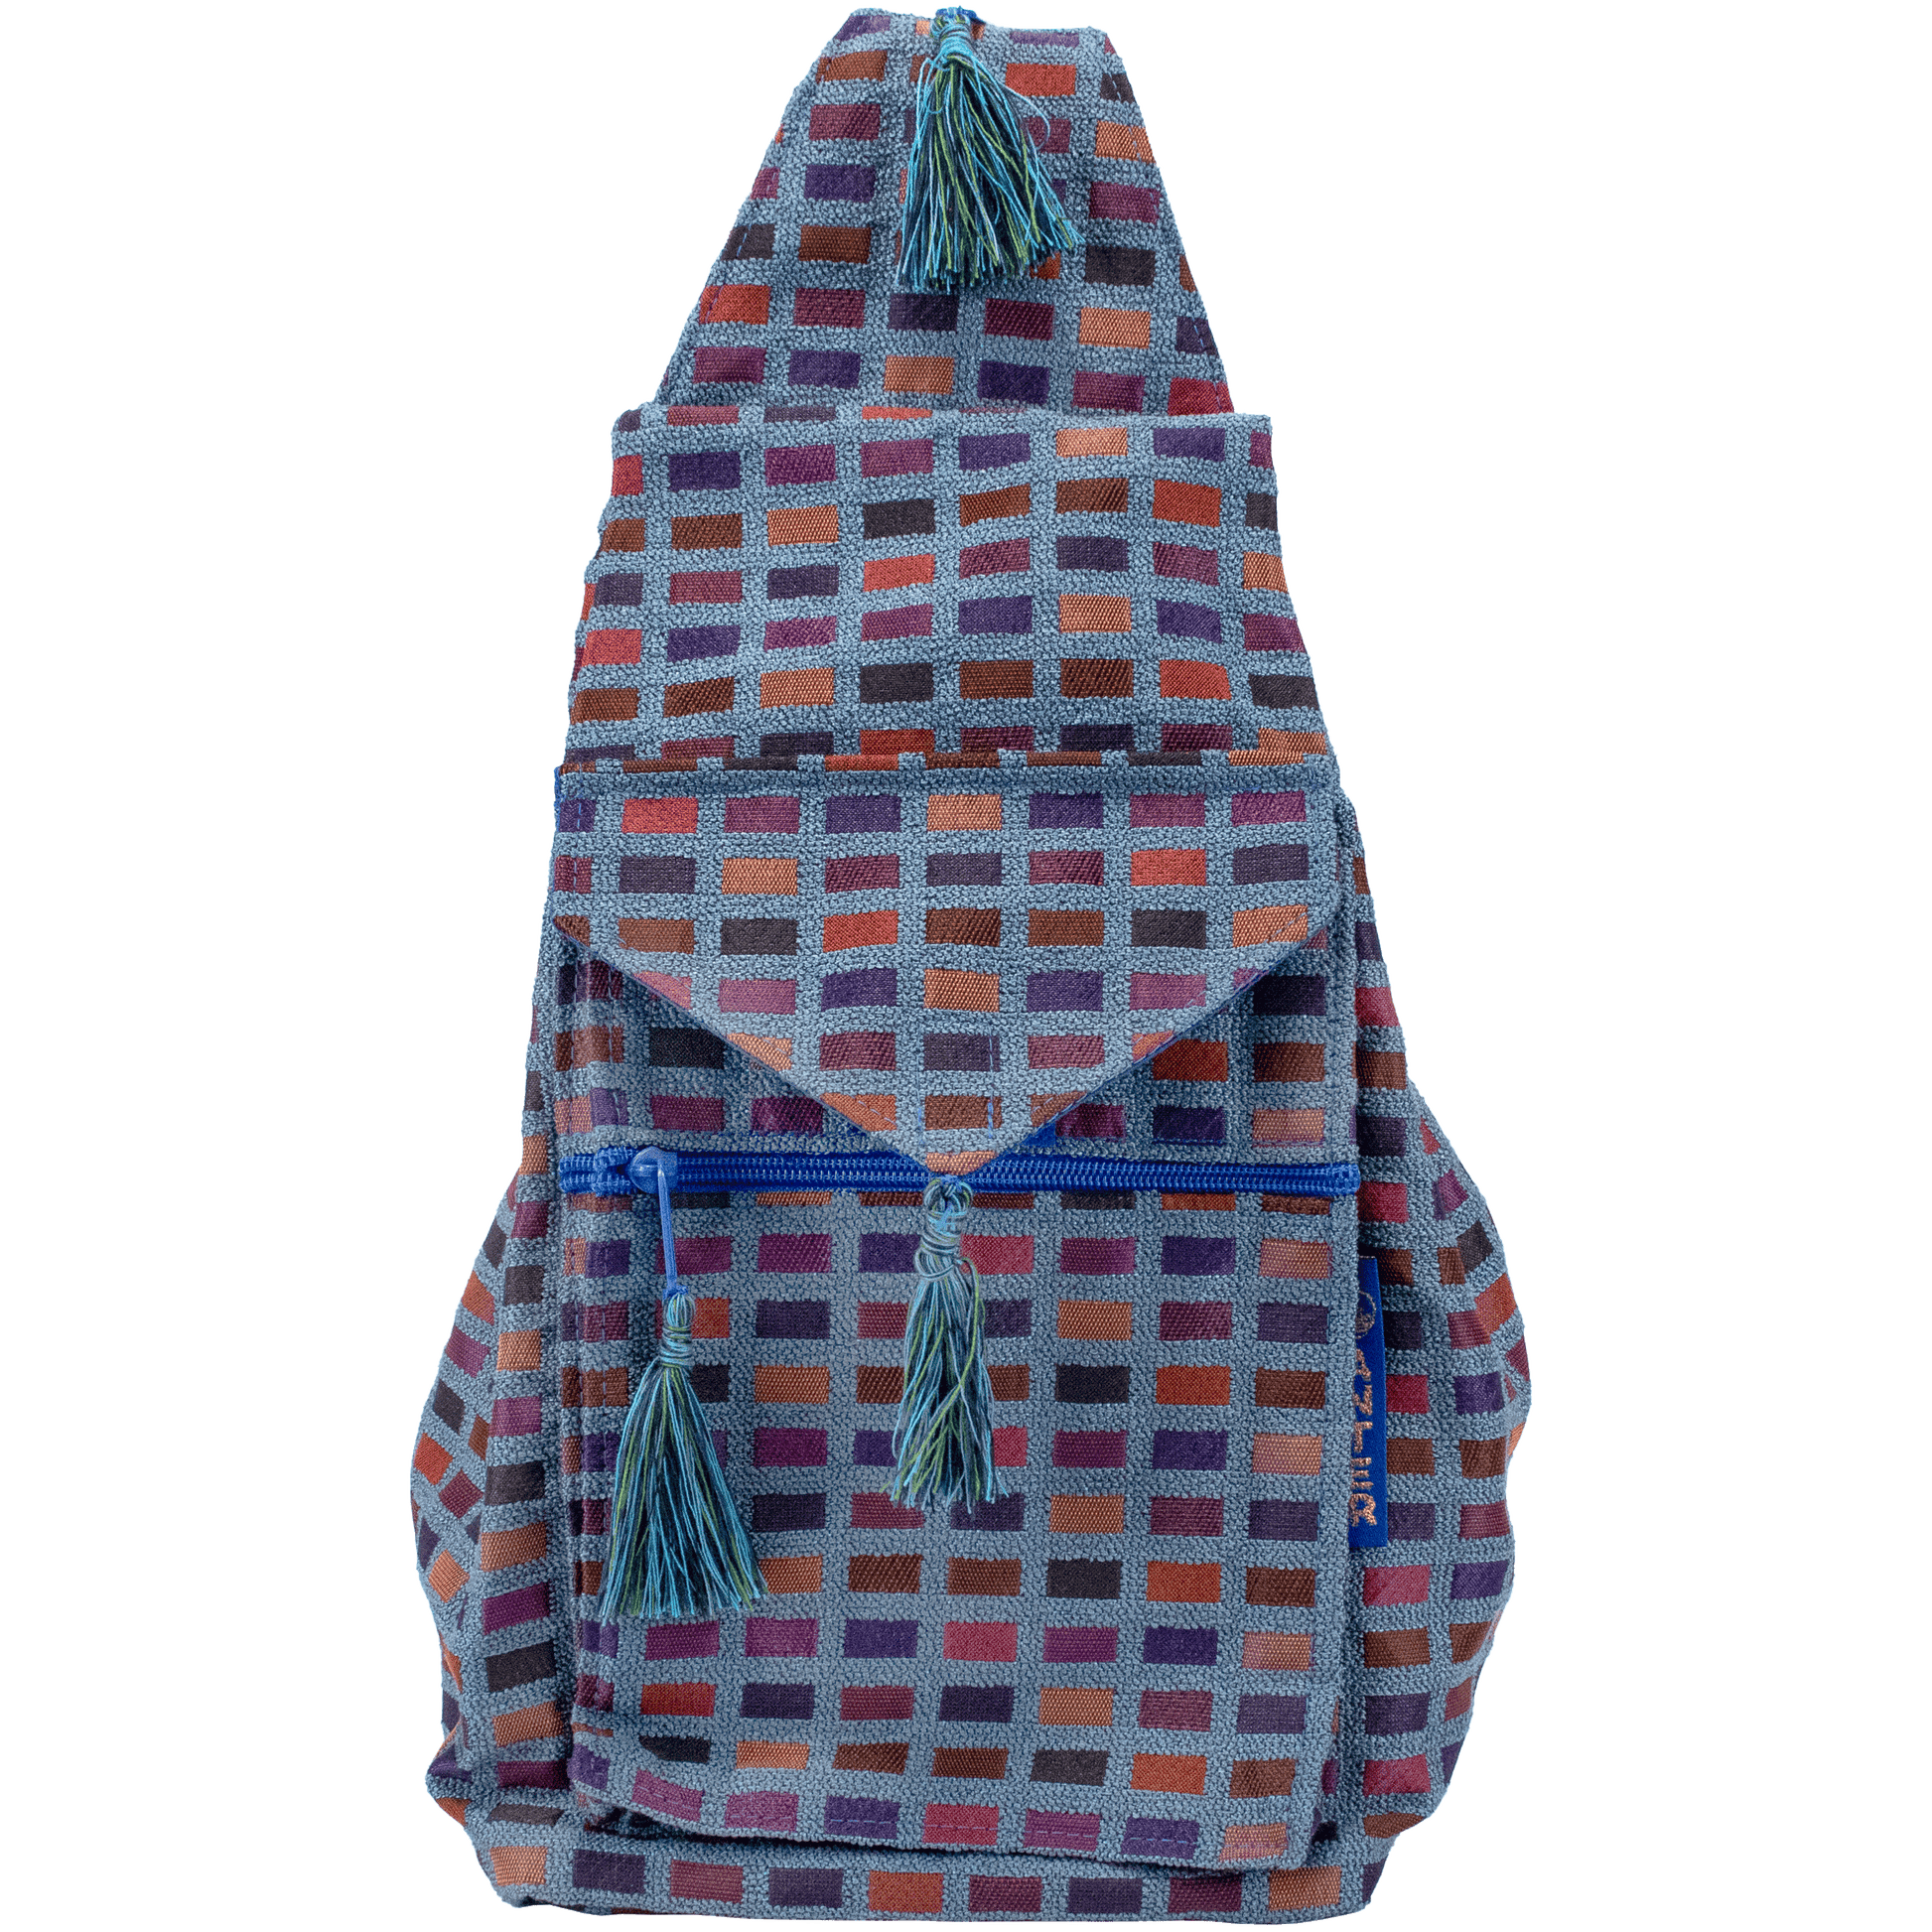 Convertible backpack shoulder bag blue with earthy toned tile pattern